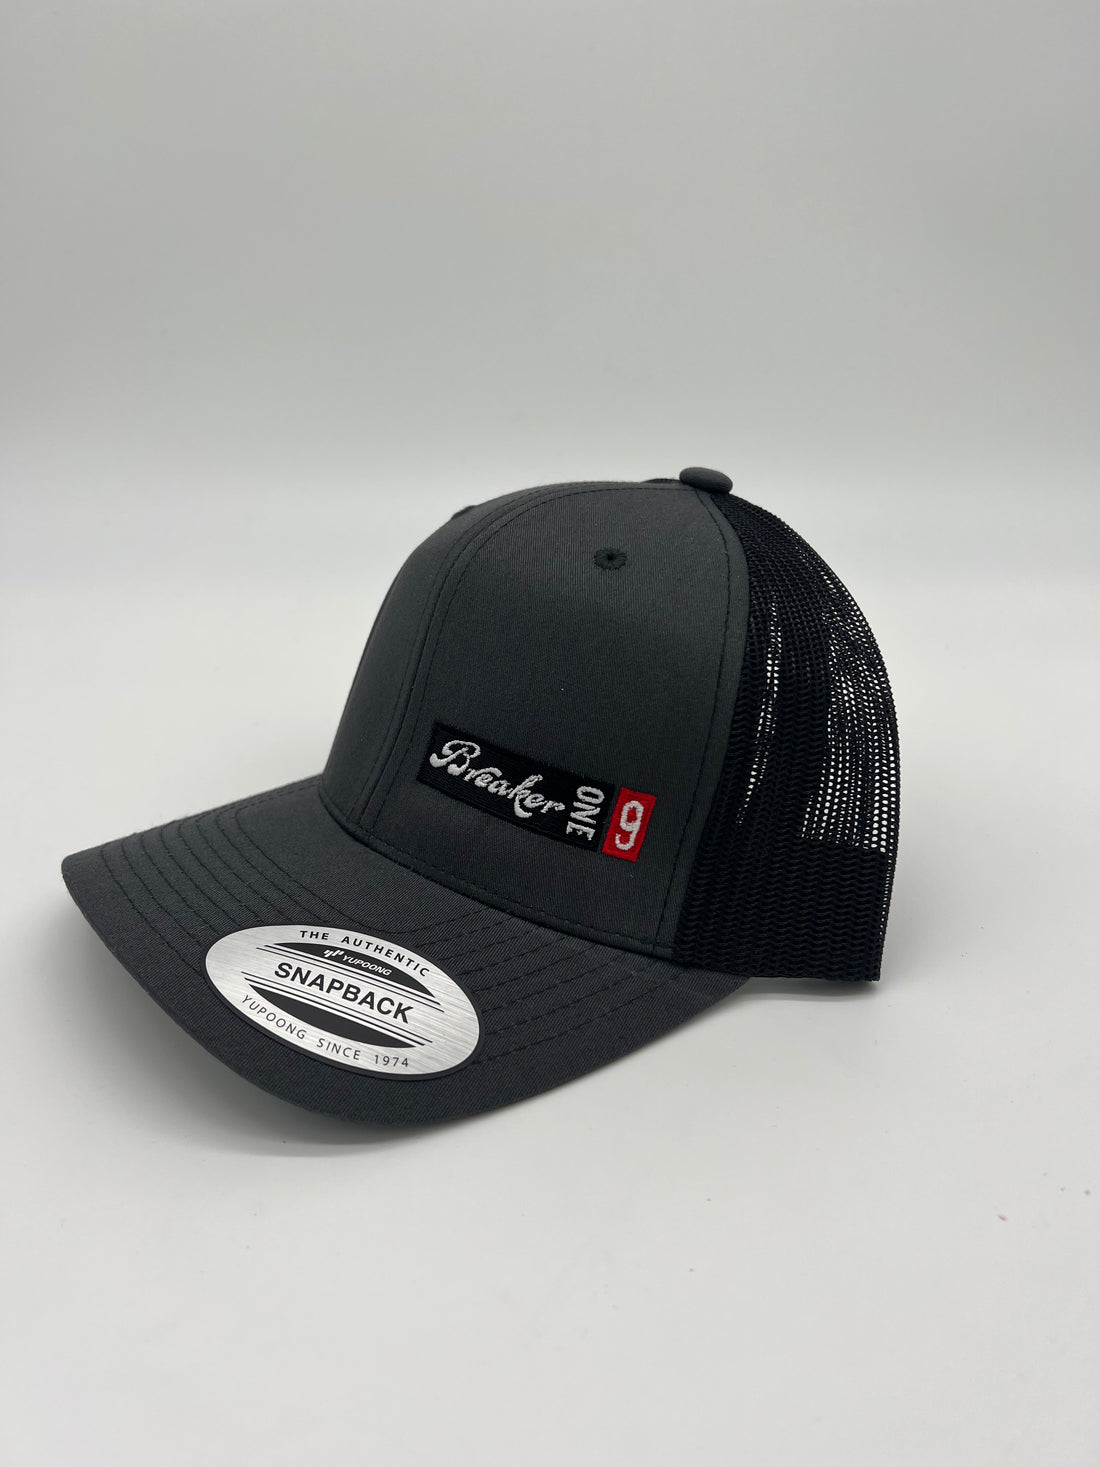 BreakerOne9 - Grey/Black Logo Hat